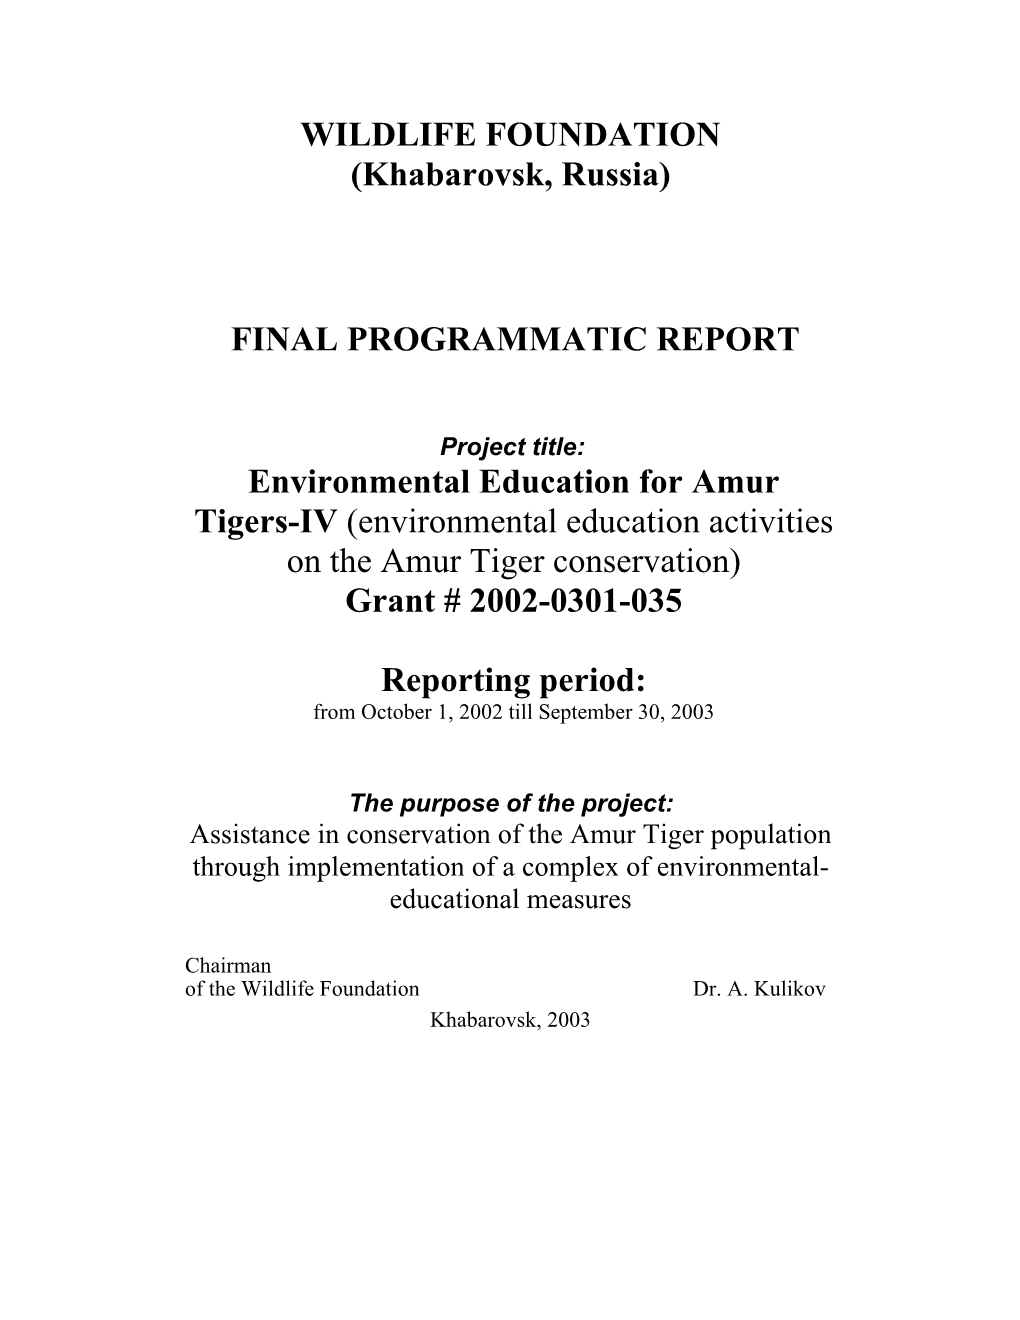 (Khabarovsk, Russia) FINAL PROGRAMMATIC REPORT